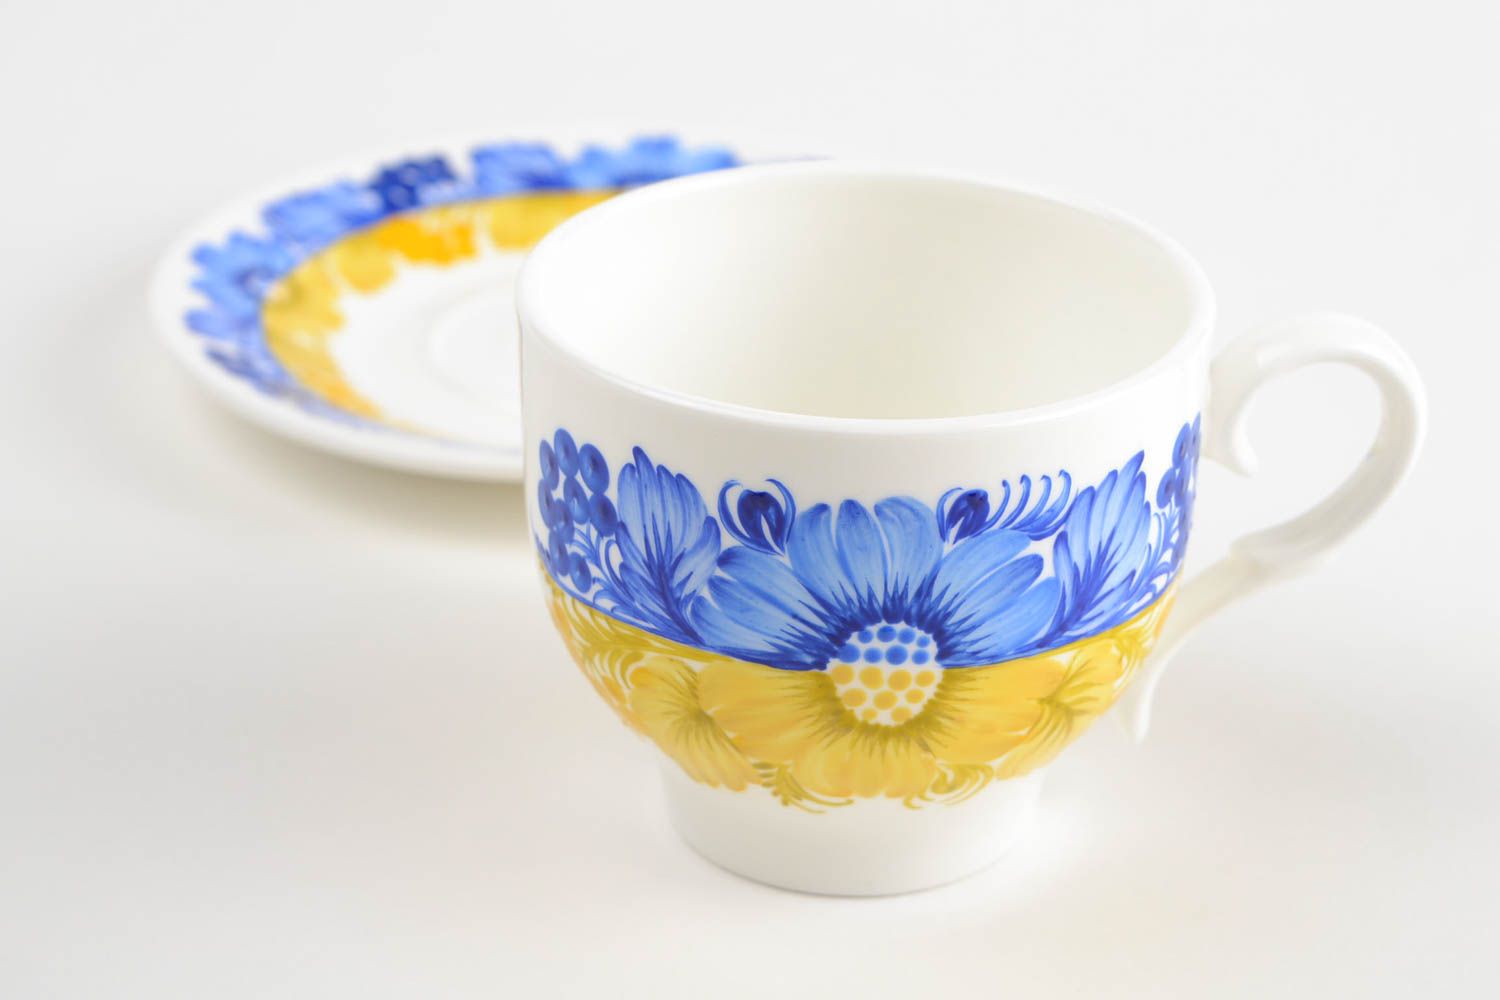 Elegant porcelain teacup in Ukrainian flag colors - yellow and blue photo 3